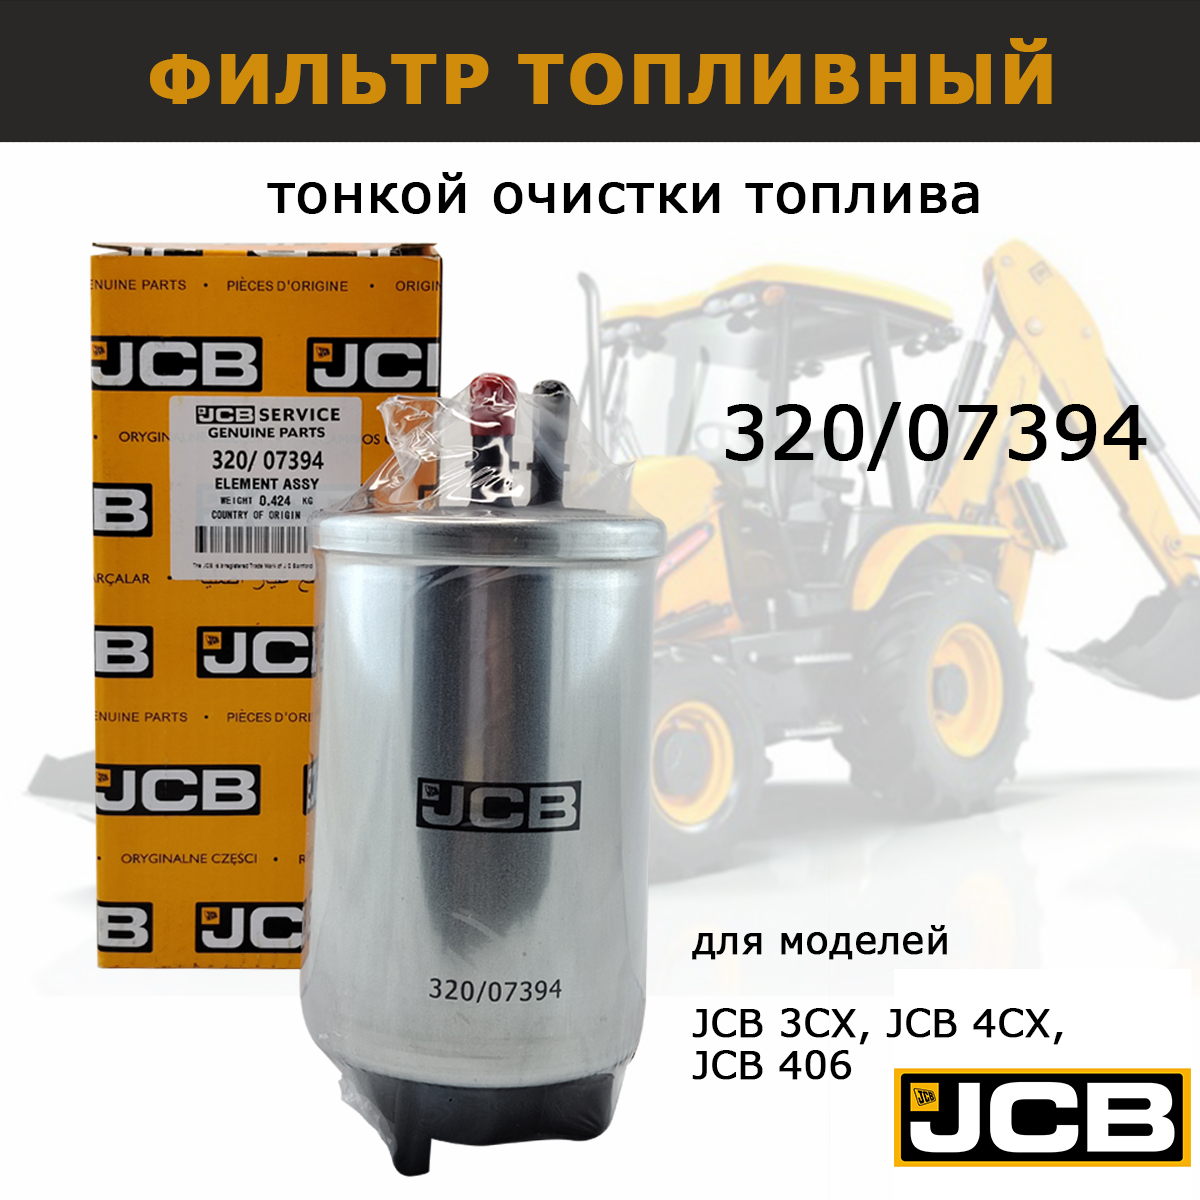 Фильтр топливный JCB 320/07394 тонкой очистки запчасти для спецтехники 3cx 4cx